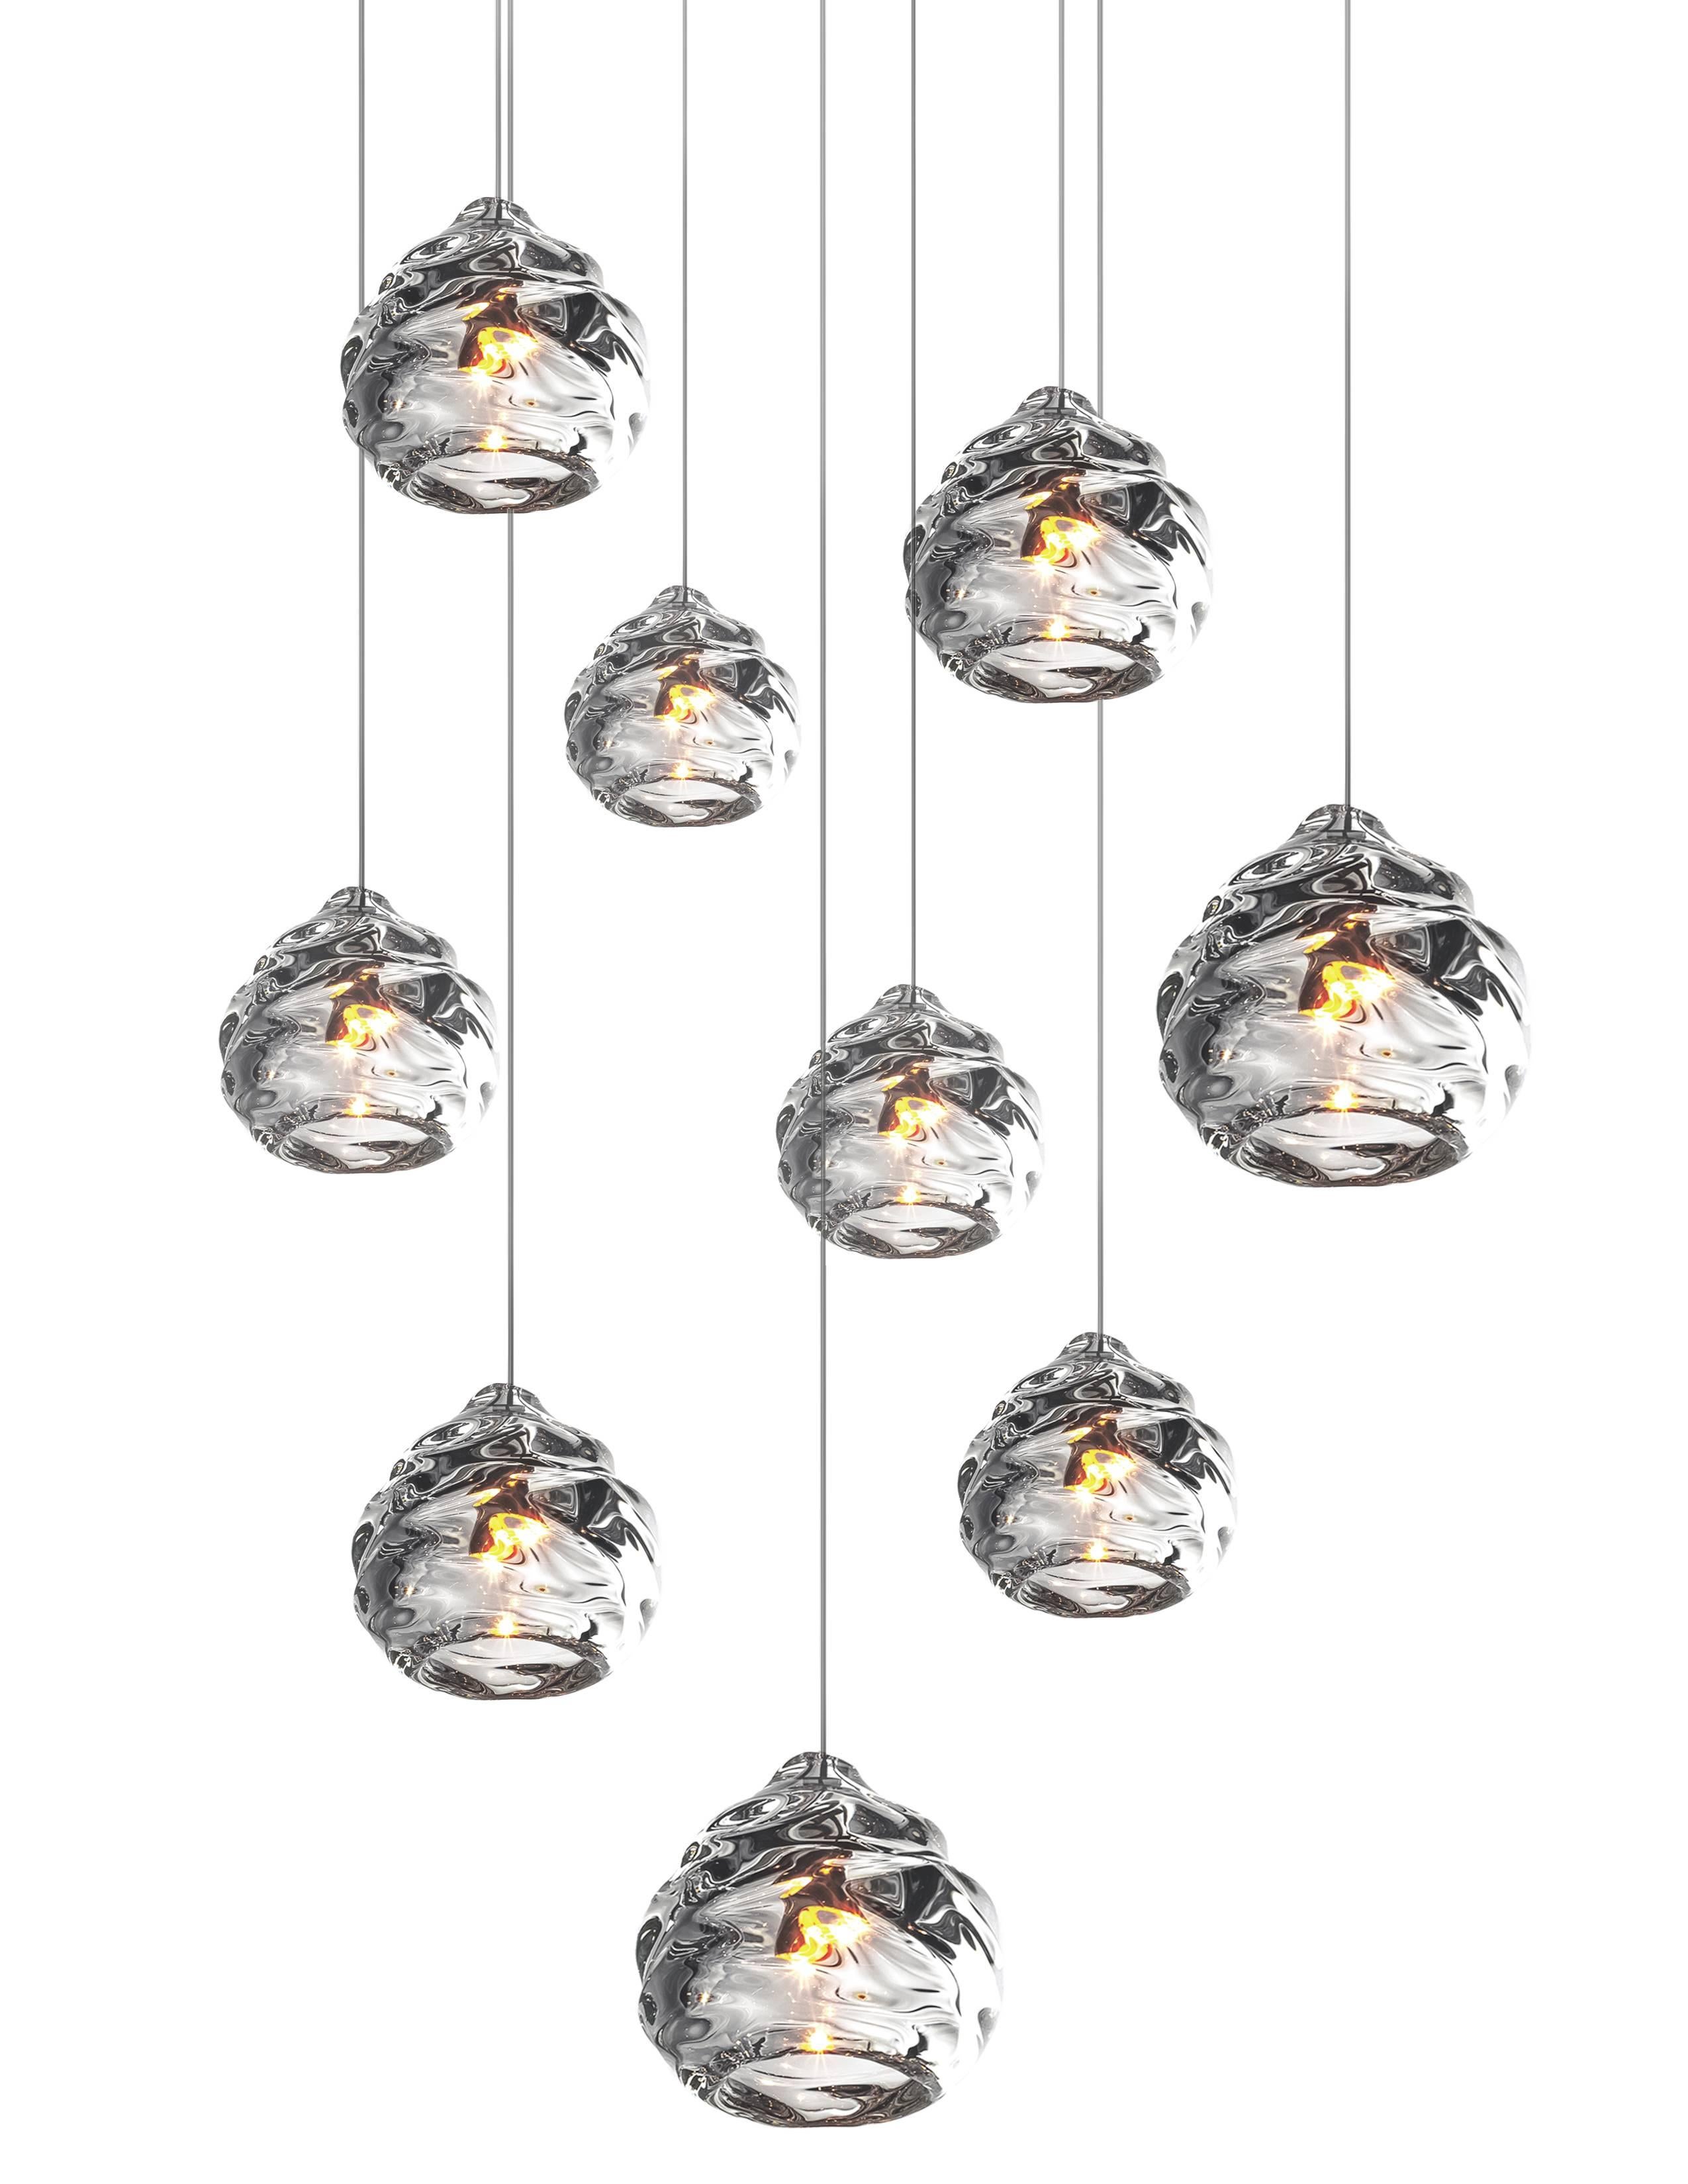 Happy light chandelier
Nine handblown glass Happy pendants.
This includes the satin nickel 16